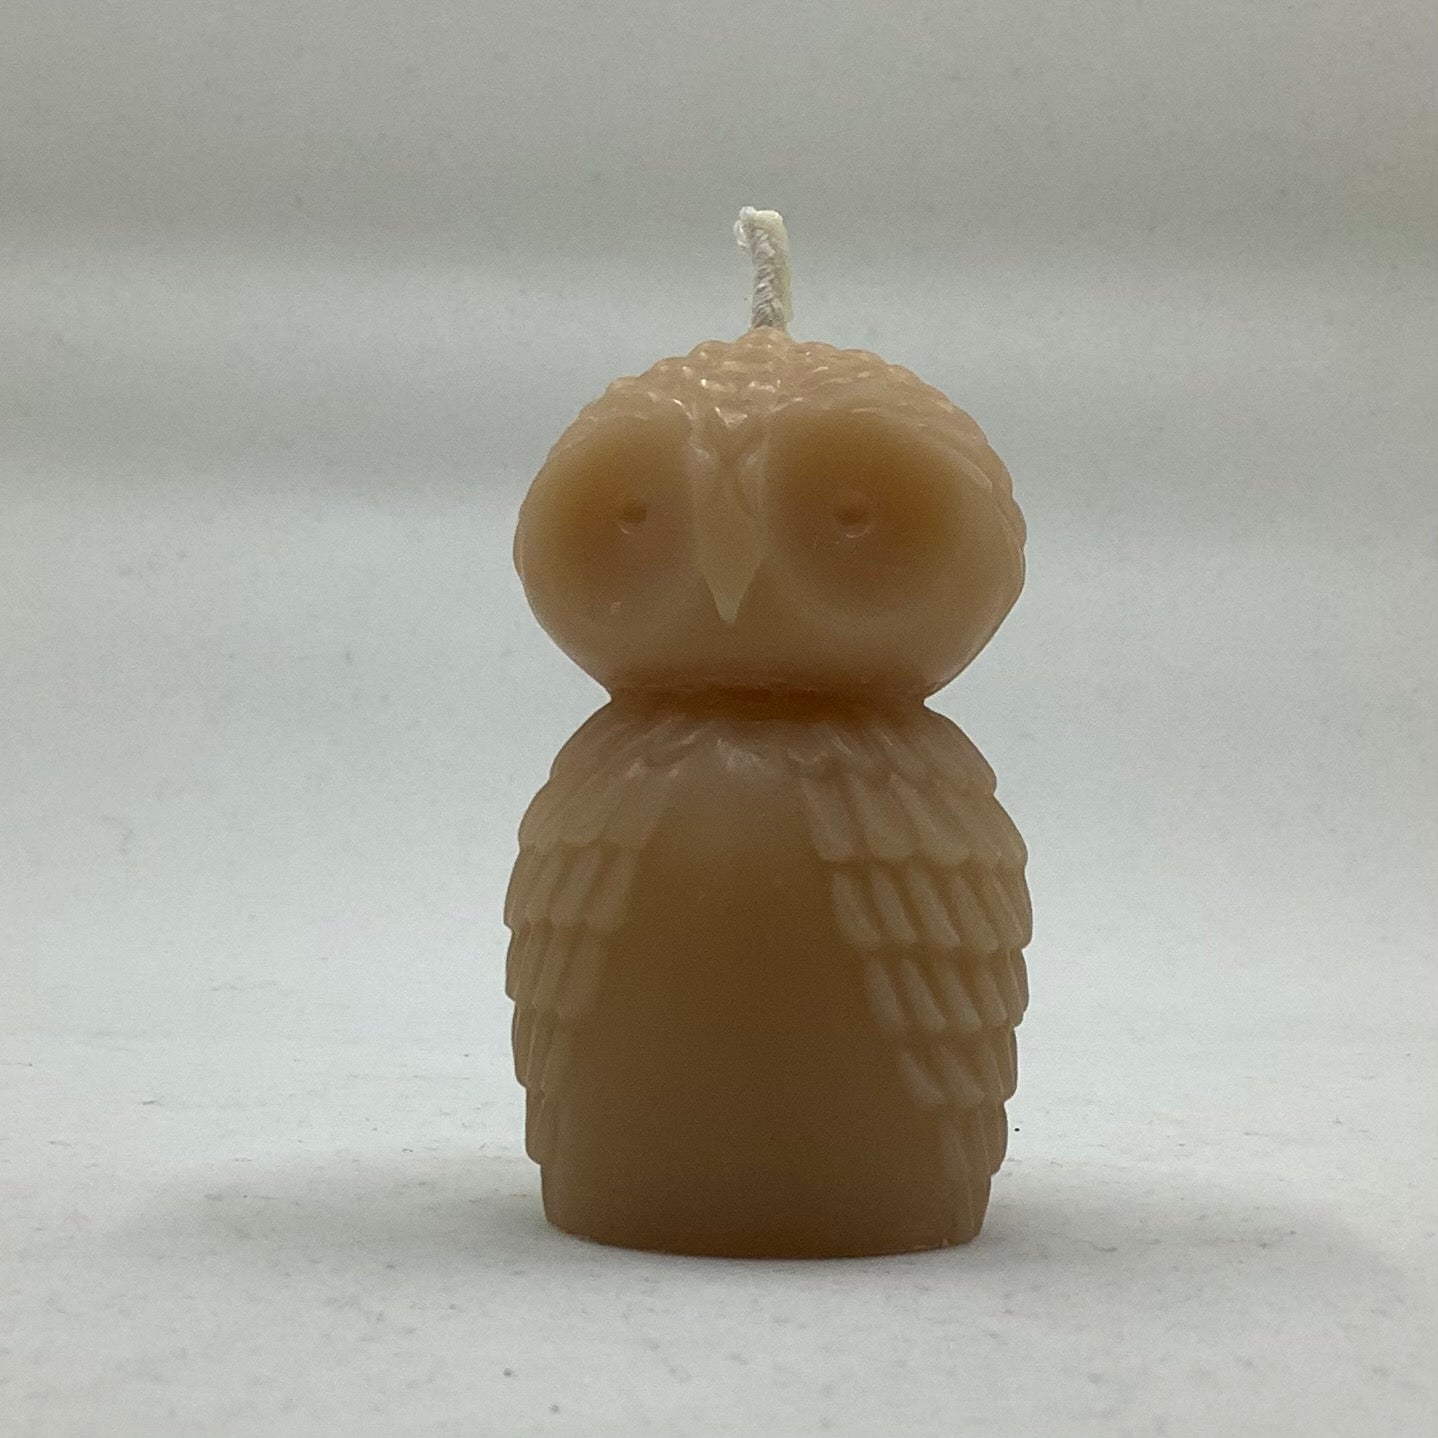 Beeswax Candle - Small Barn Owl